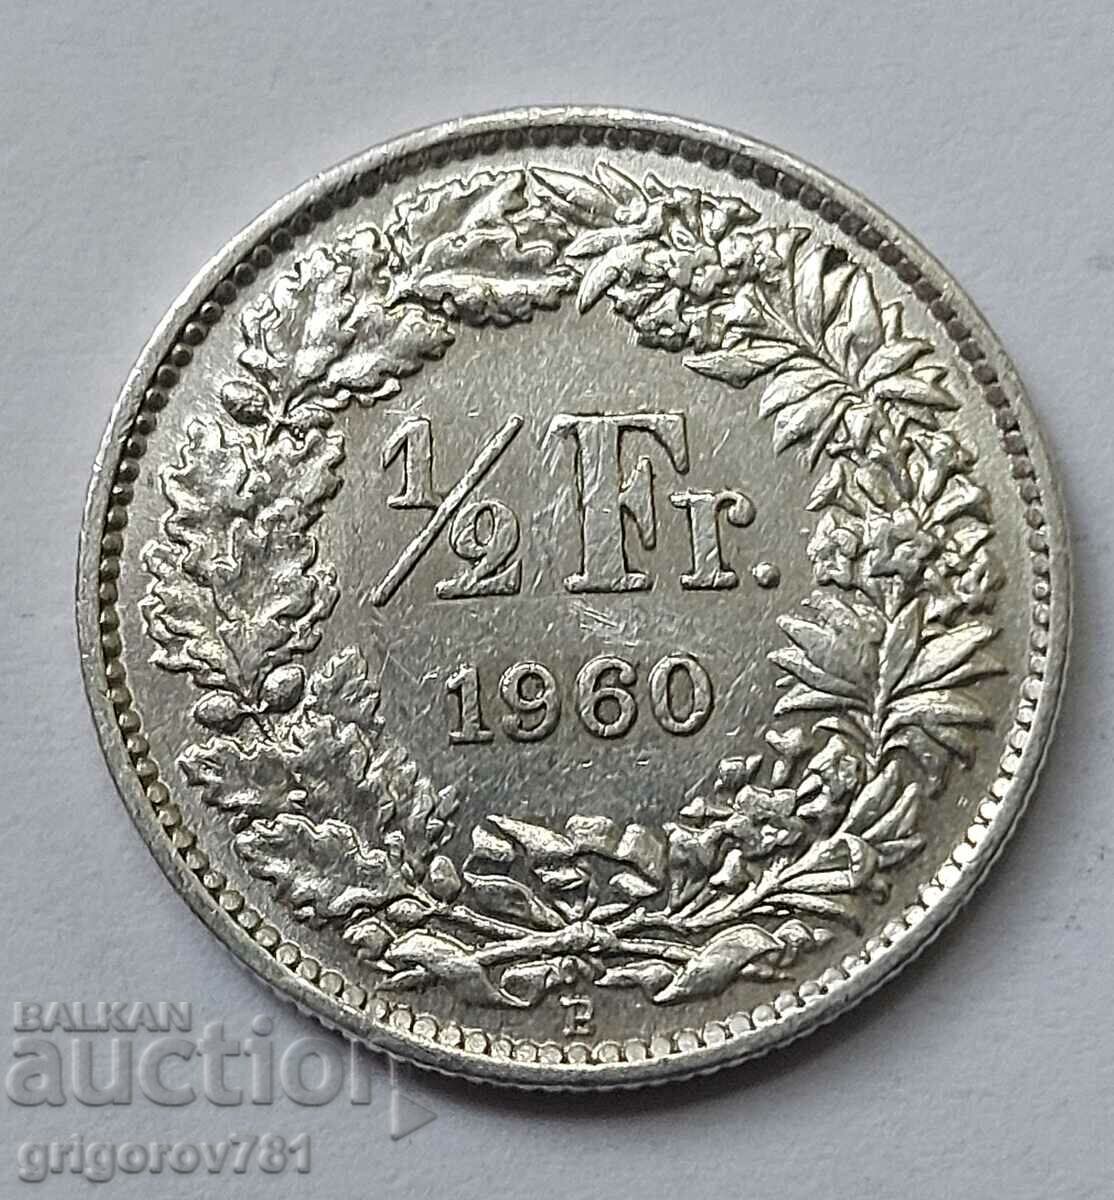 1/2 Franc Silver Switzerland 1960 B - Silver Coin #166